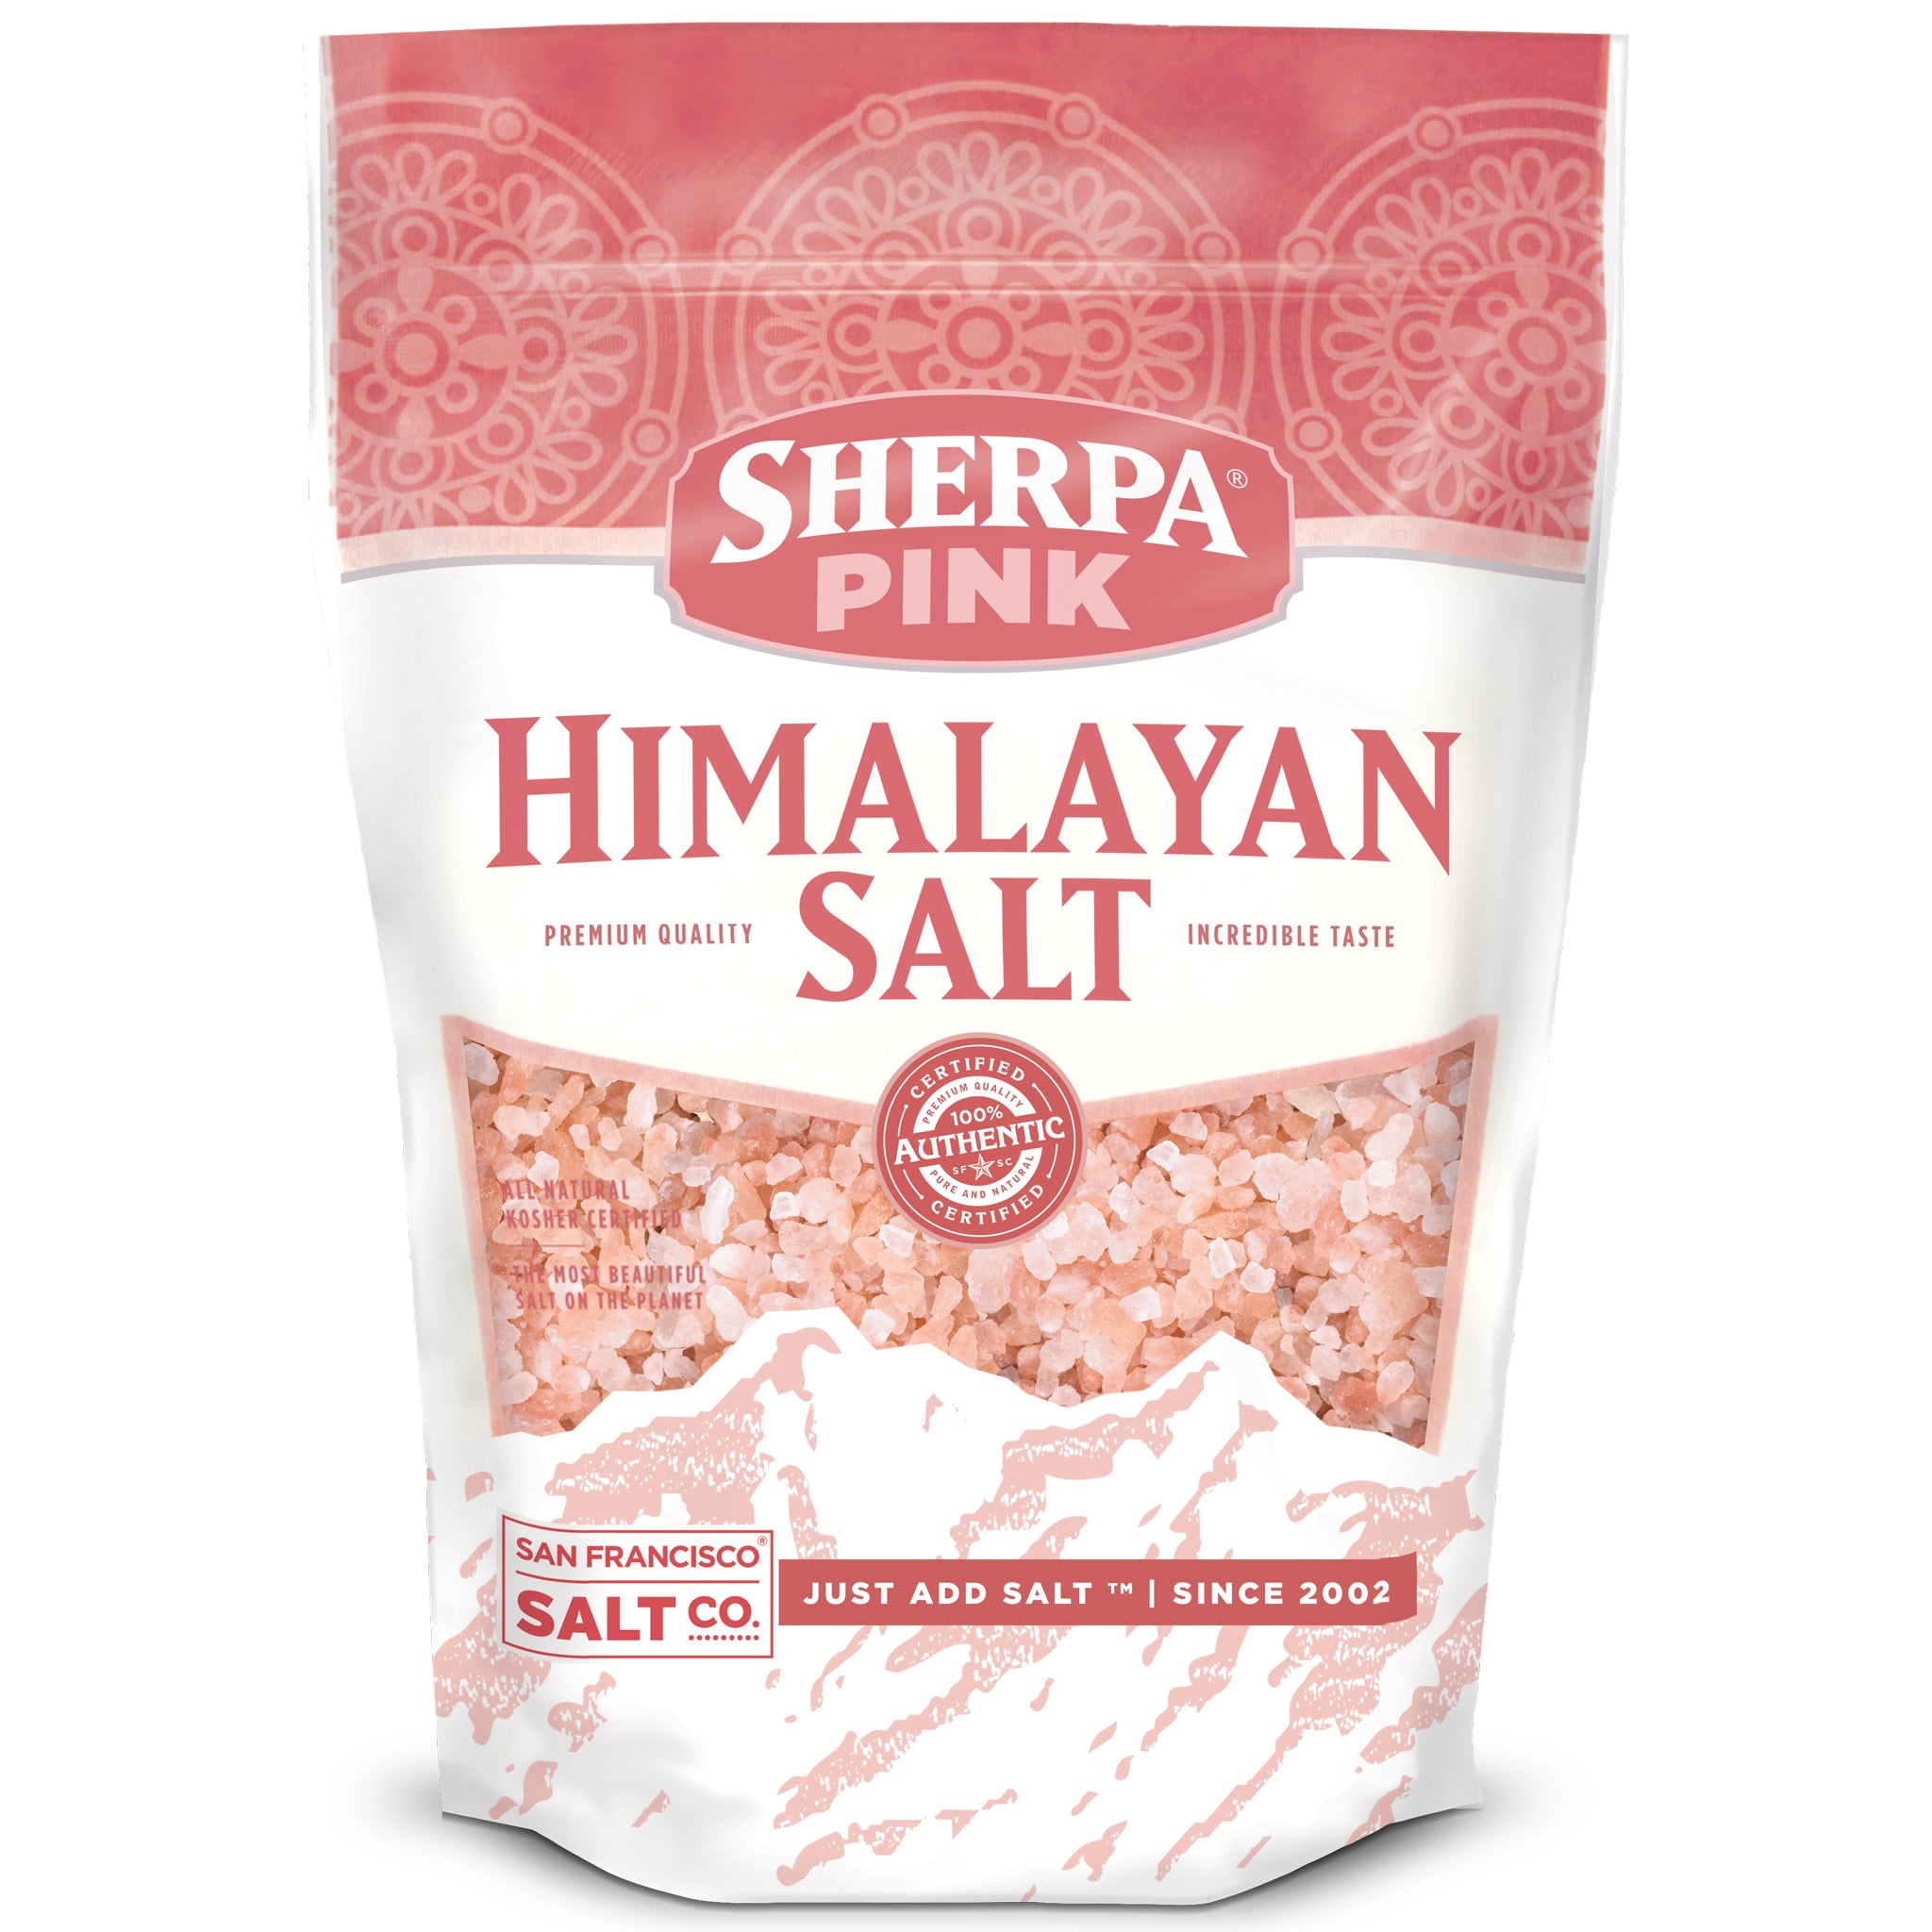 Sherpa Pink® Himalayan Salt Bulk 25 lbs. - San Francisco Salt Company